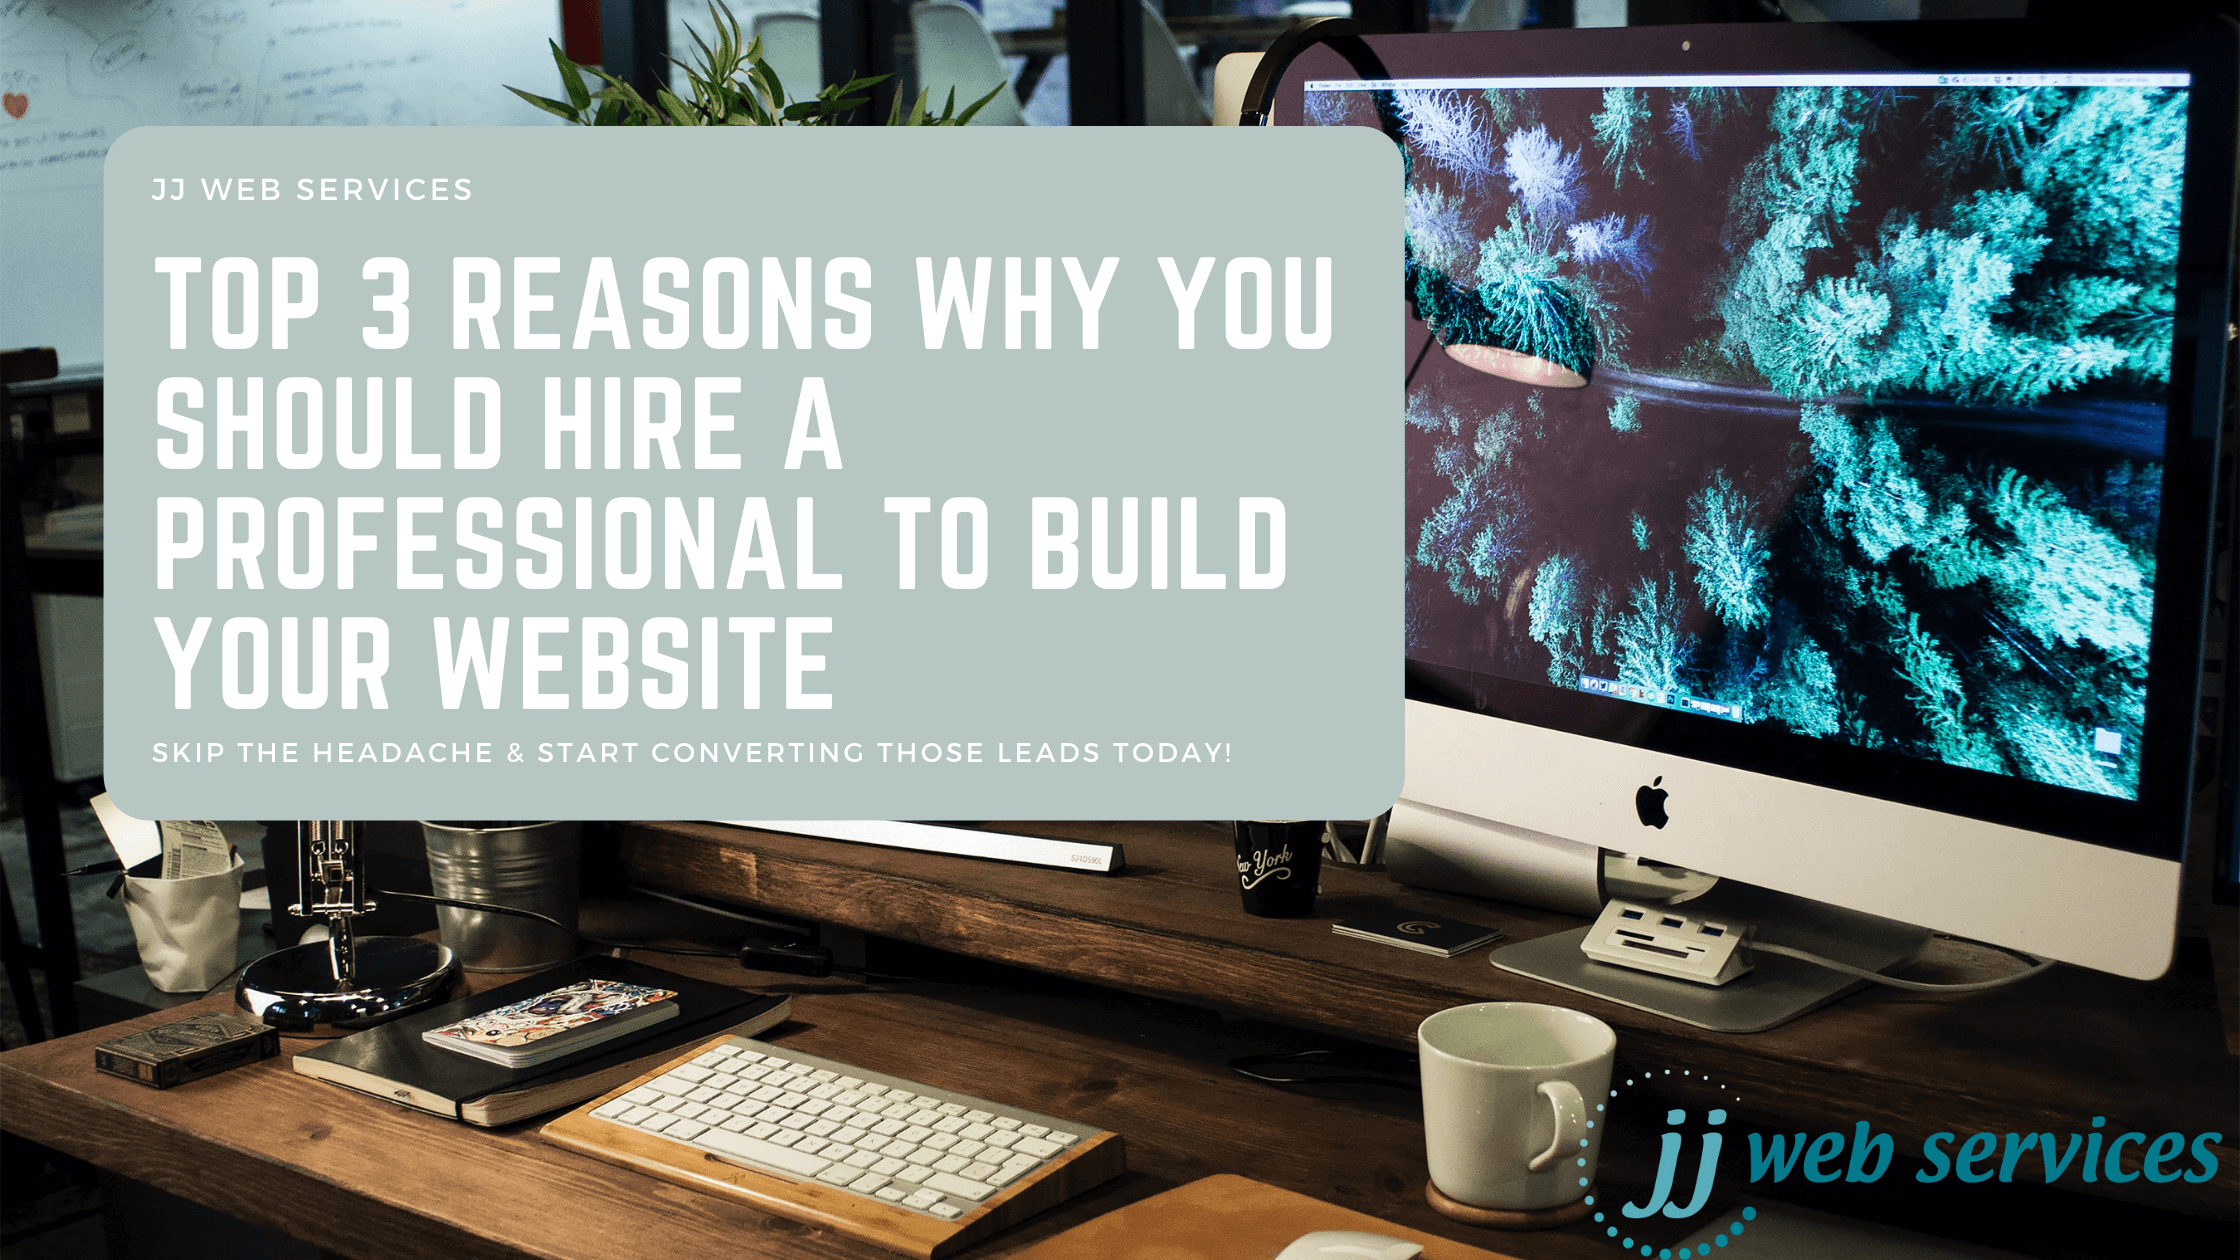 JJ Web Services| Hire a Professional to Build Your Website